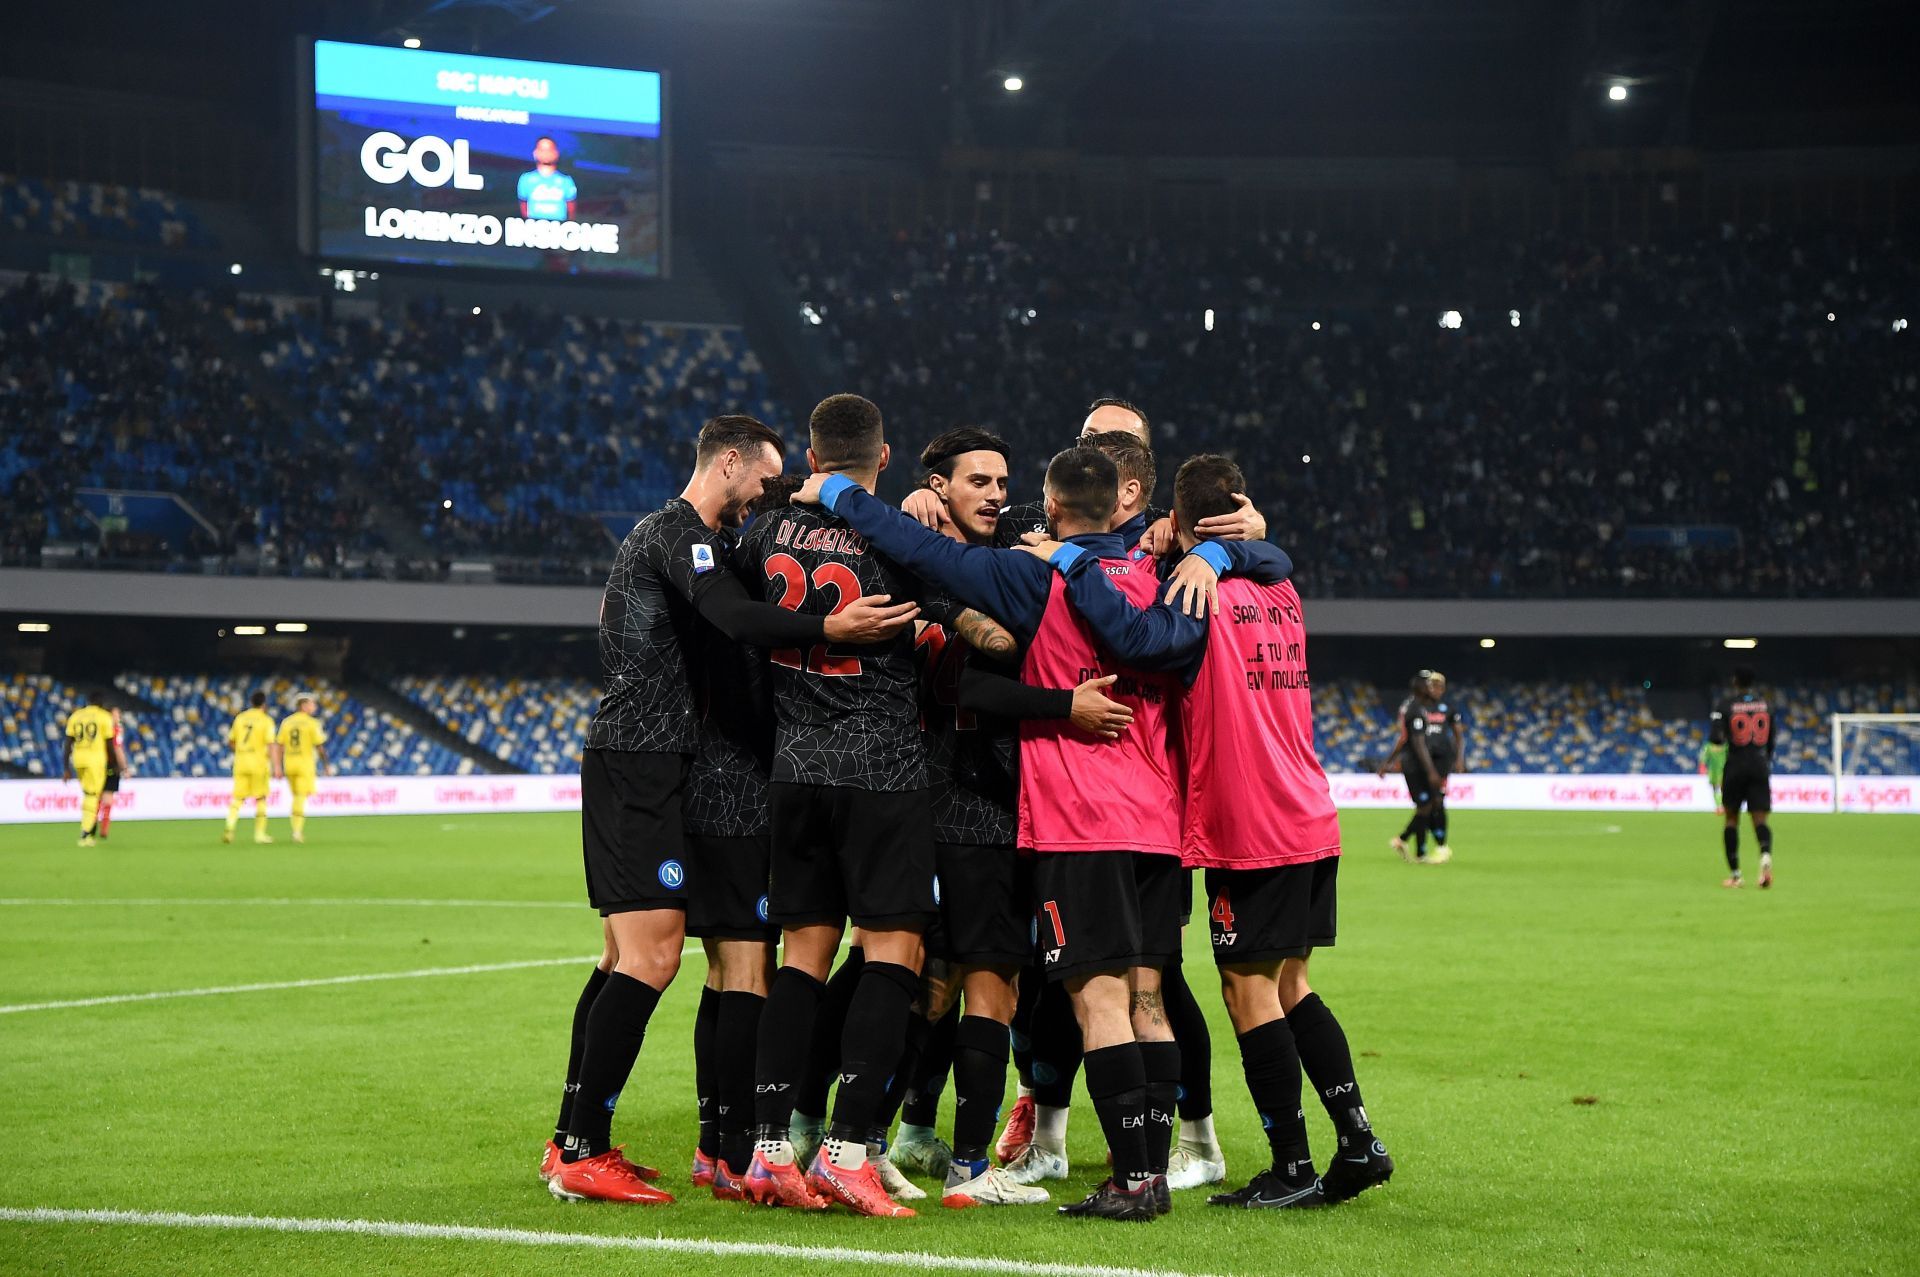 SSC Napoli will face Legia Warsaw on Thursday - UEFA Europa League